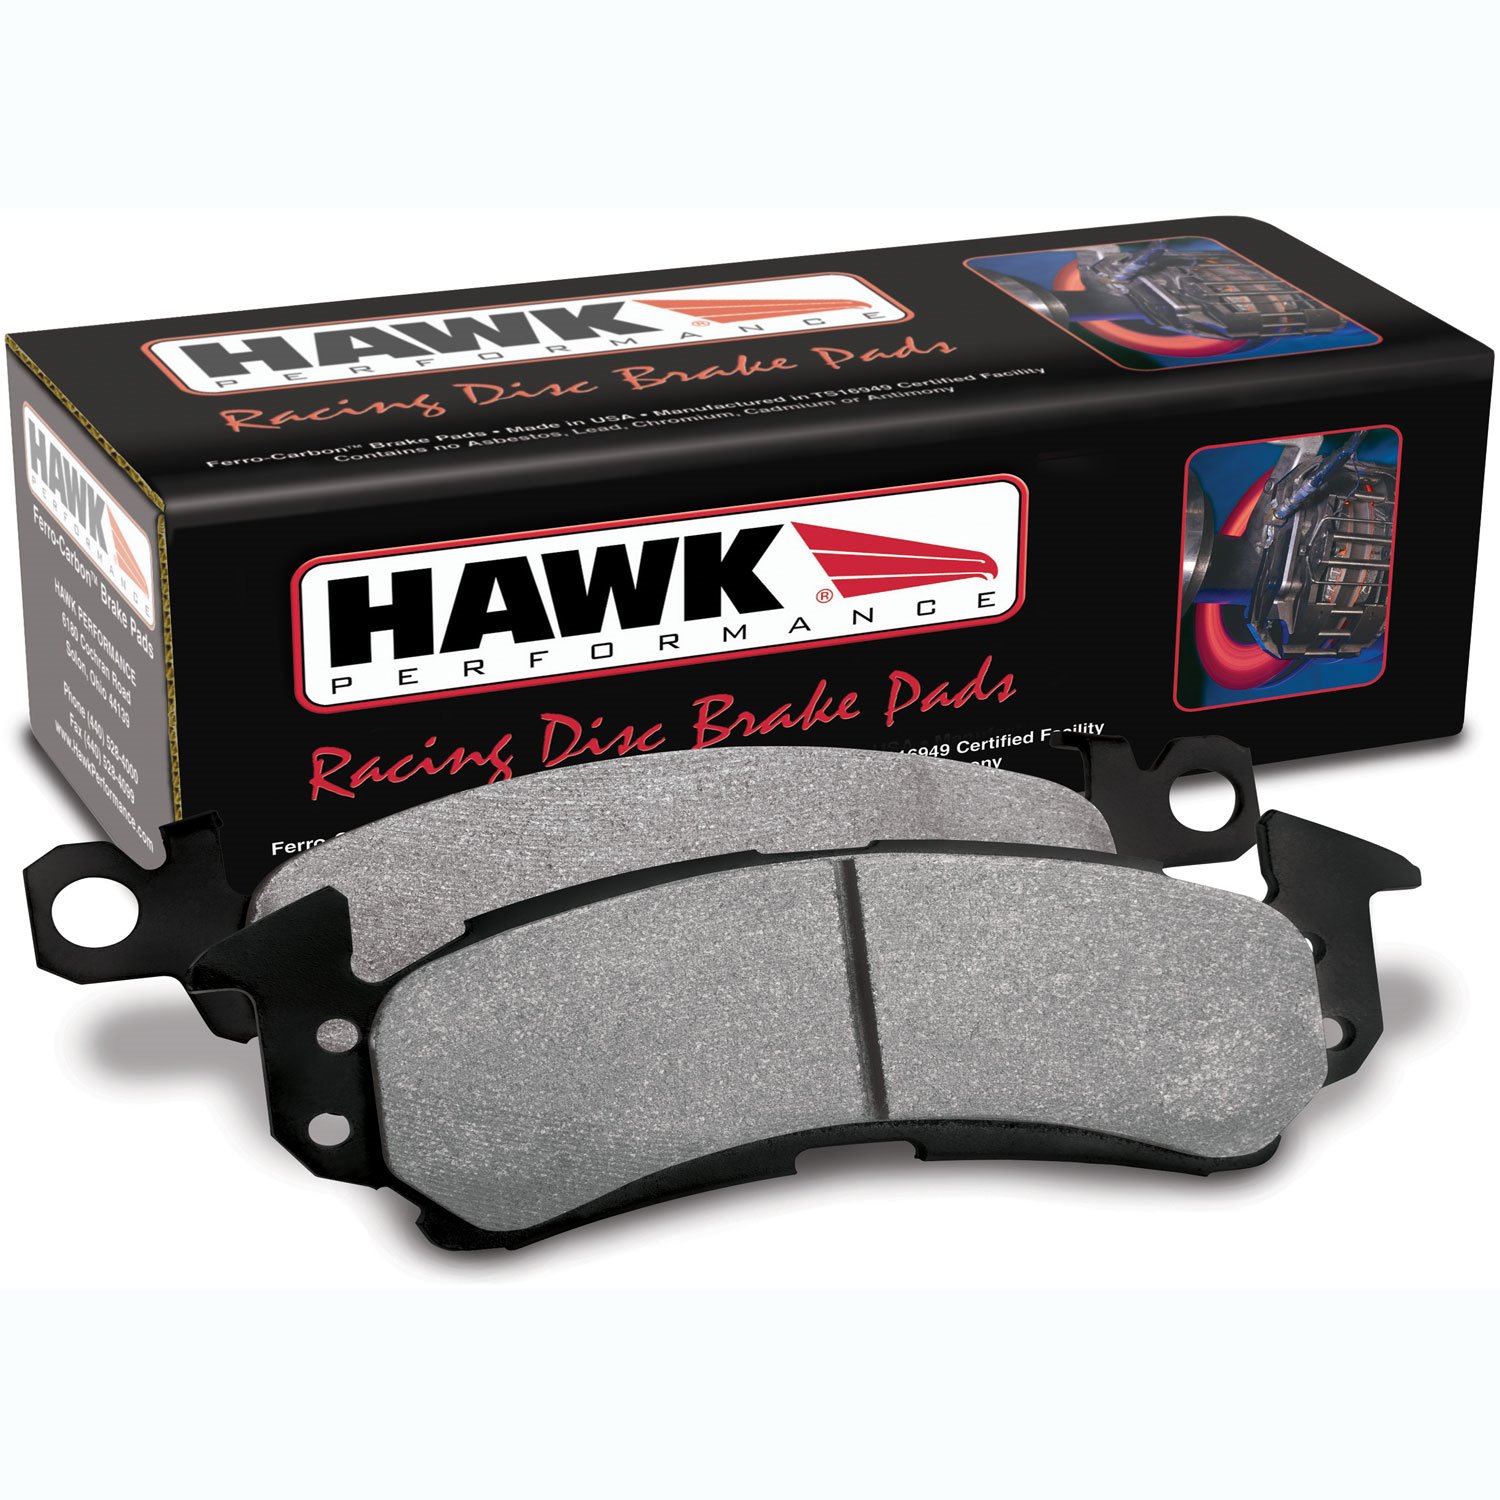 Disc Brake Pad HT-10 w/0.562 Thickness